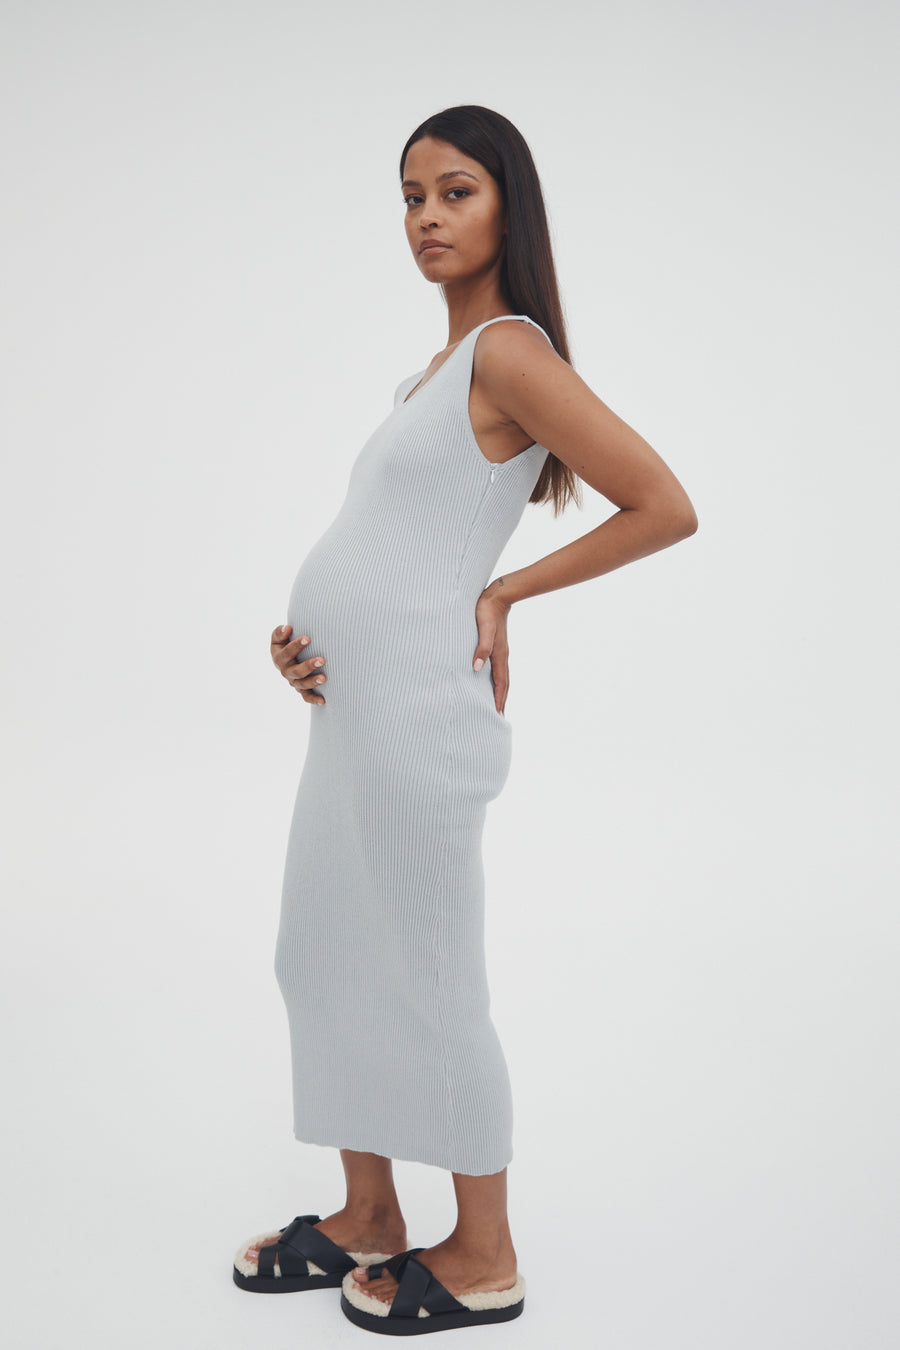 Maternity Baby Shower Dress (Ice Blue) 3